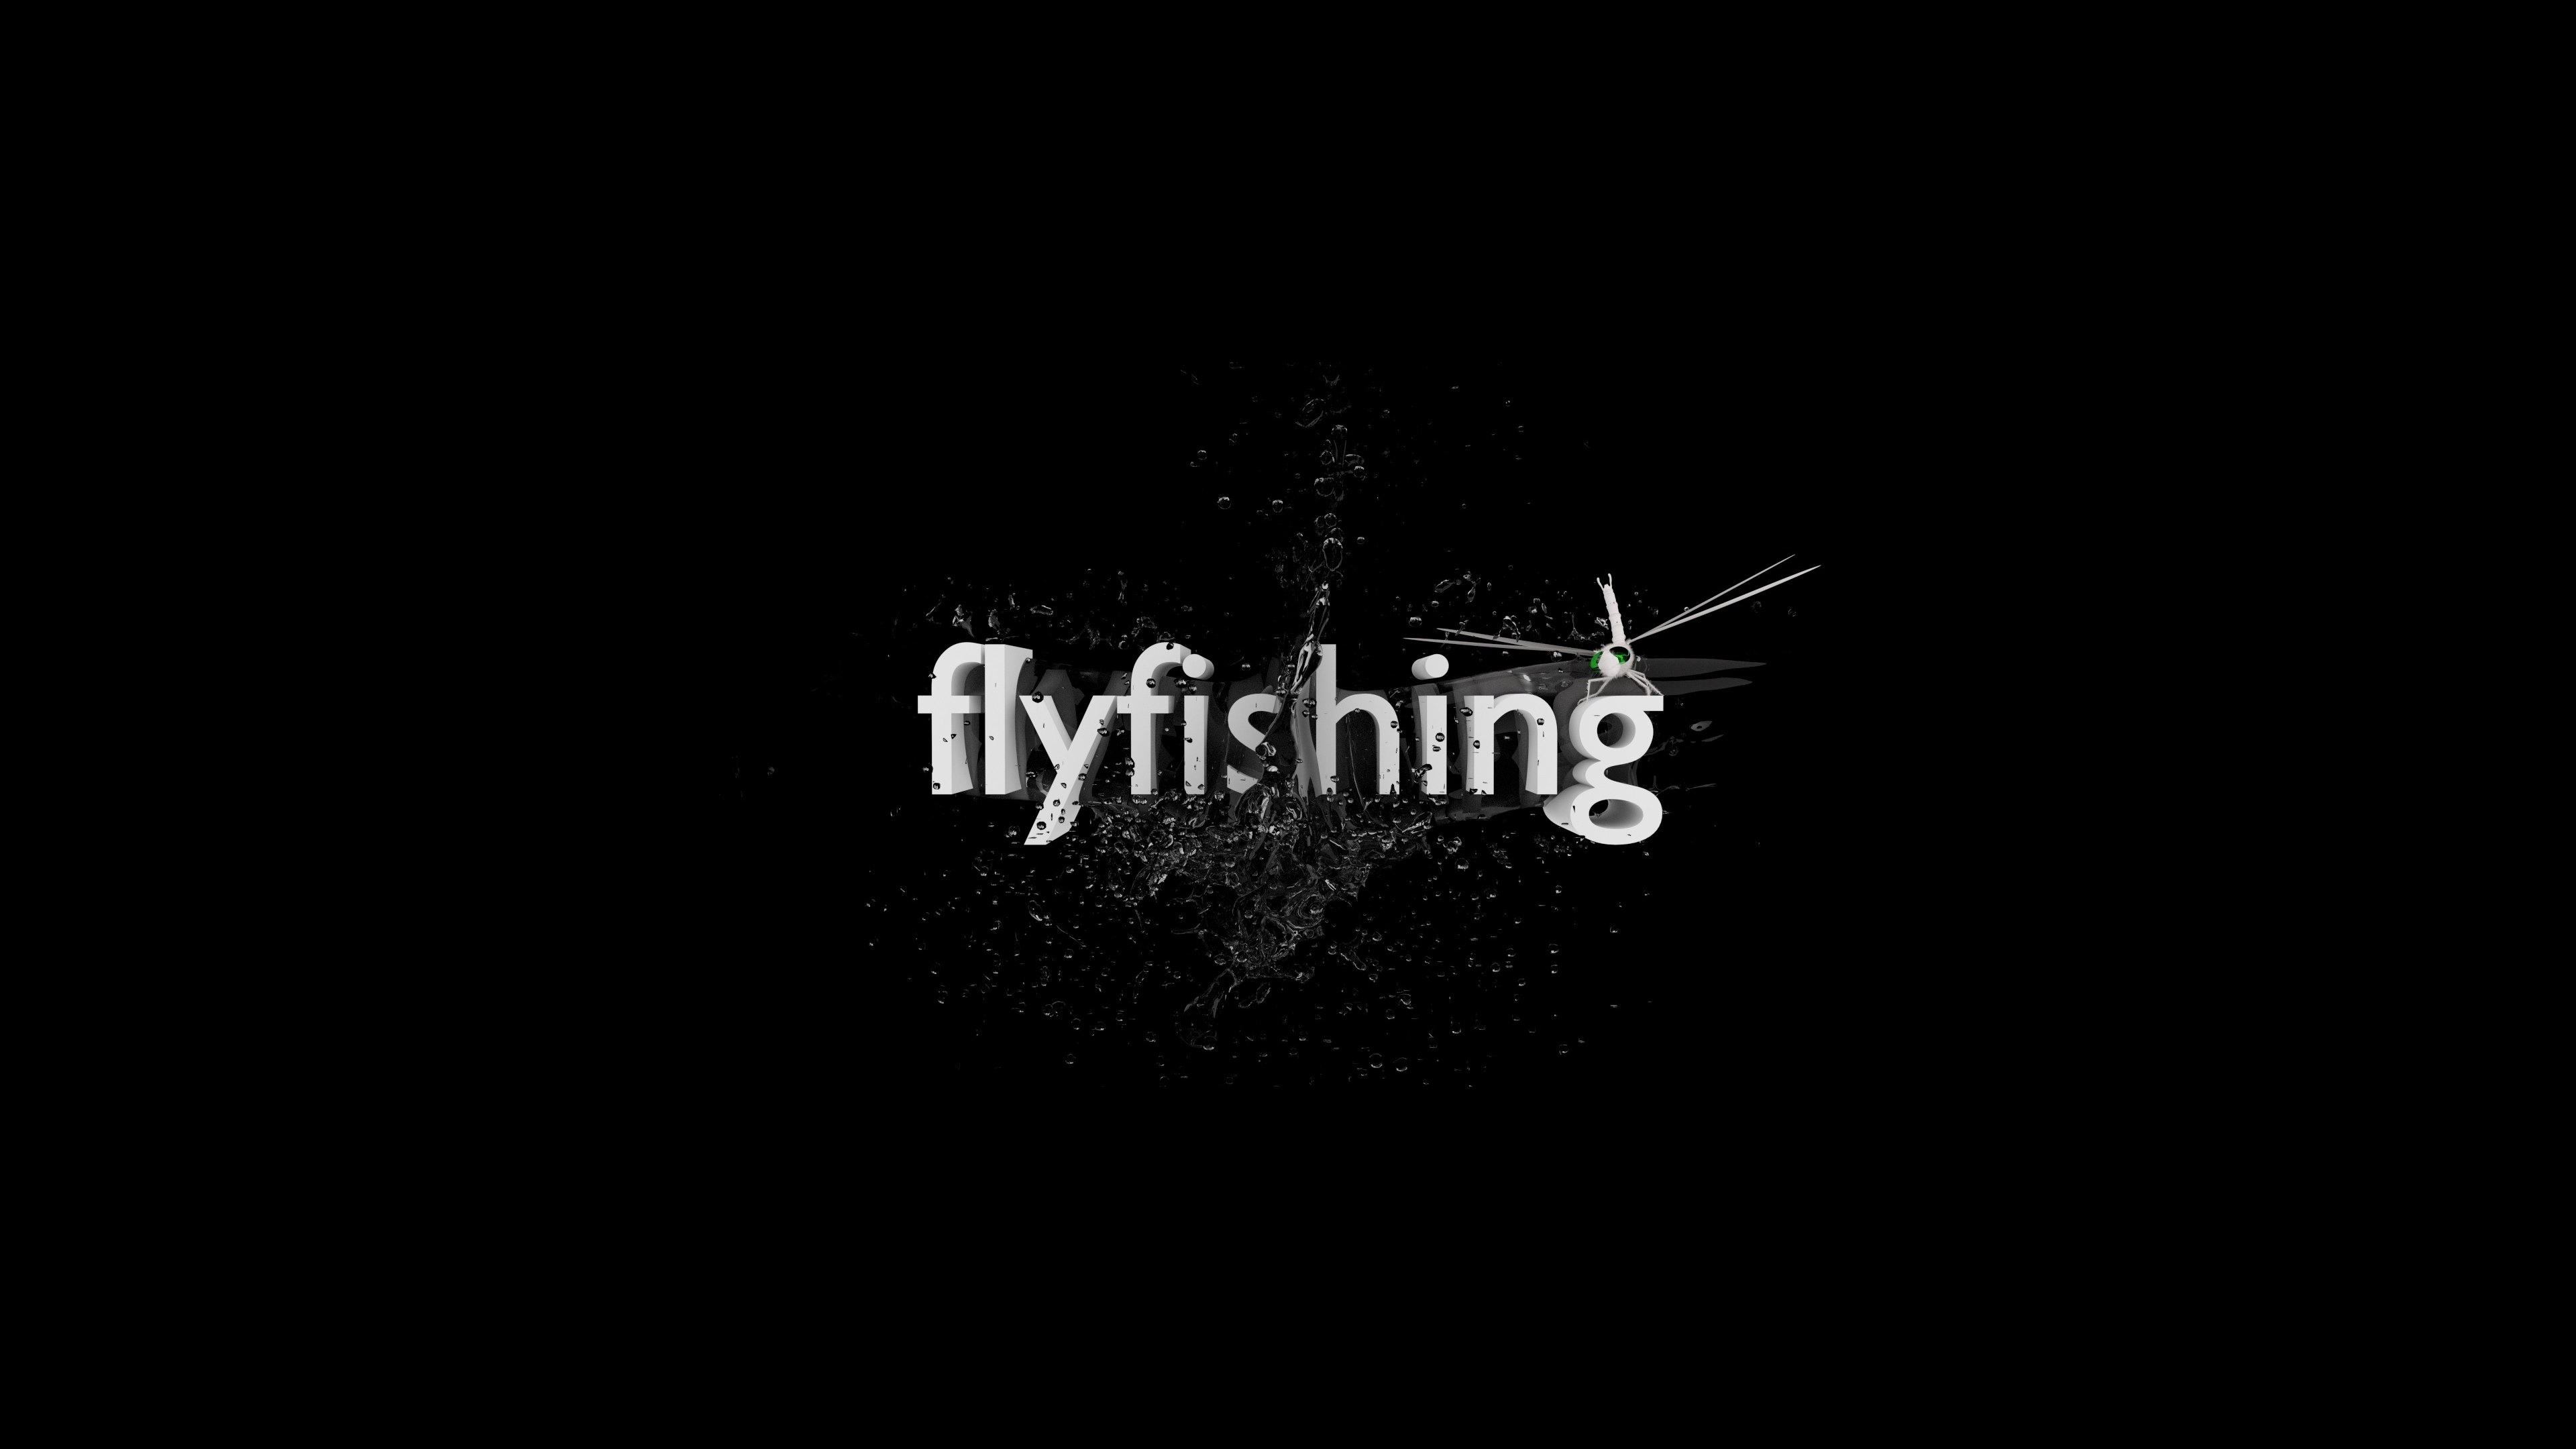 Photoshop Fly Fishing Puter Wallpaper Desktop Background